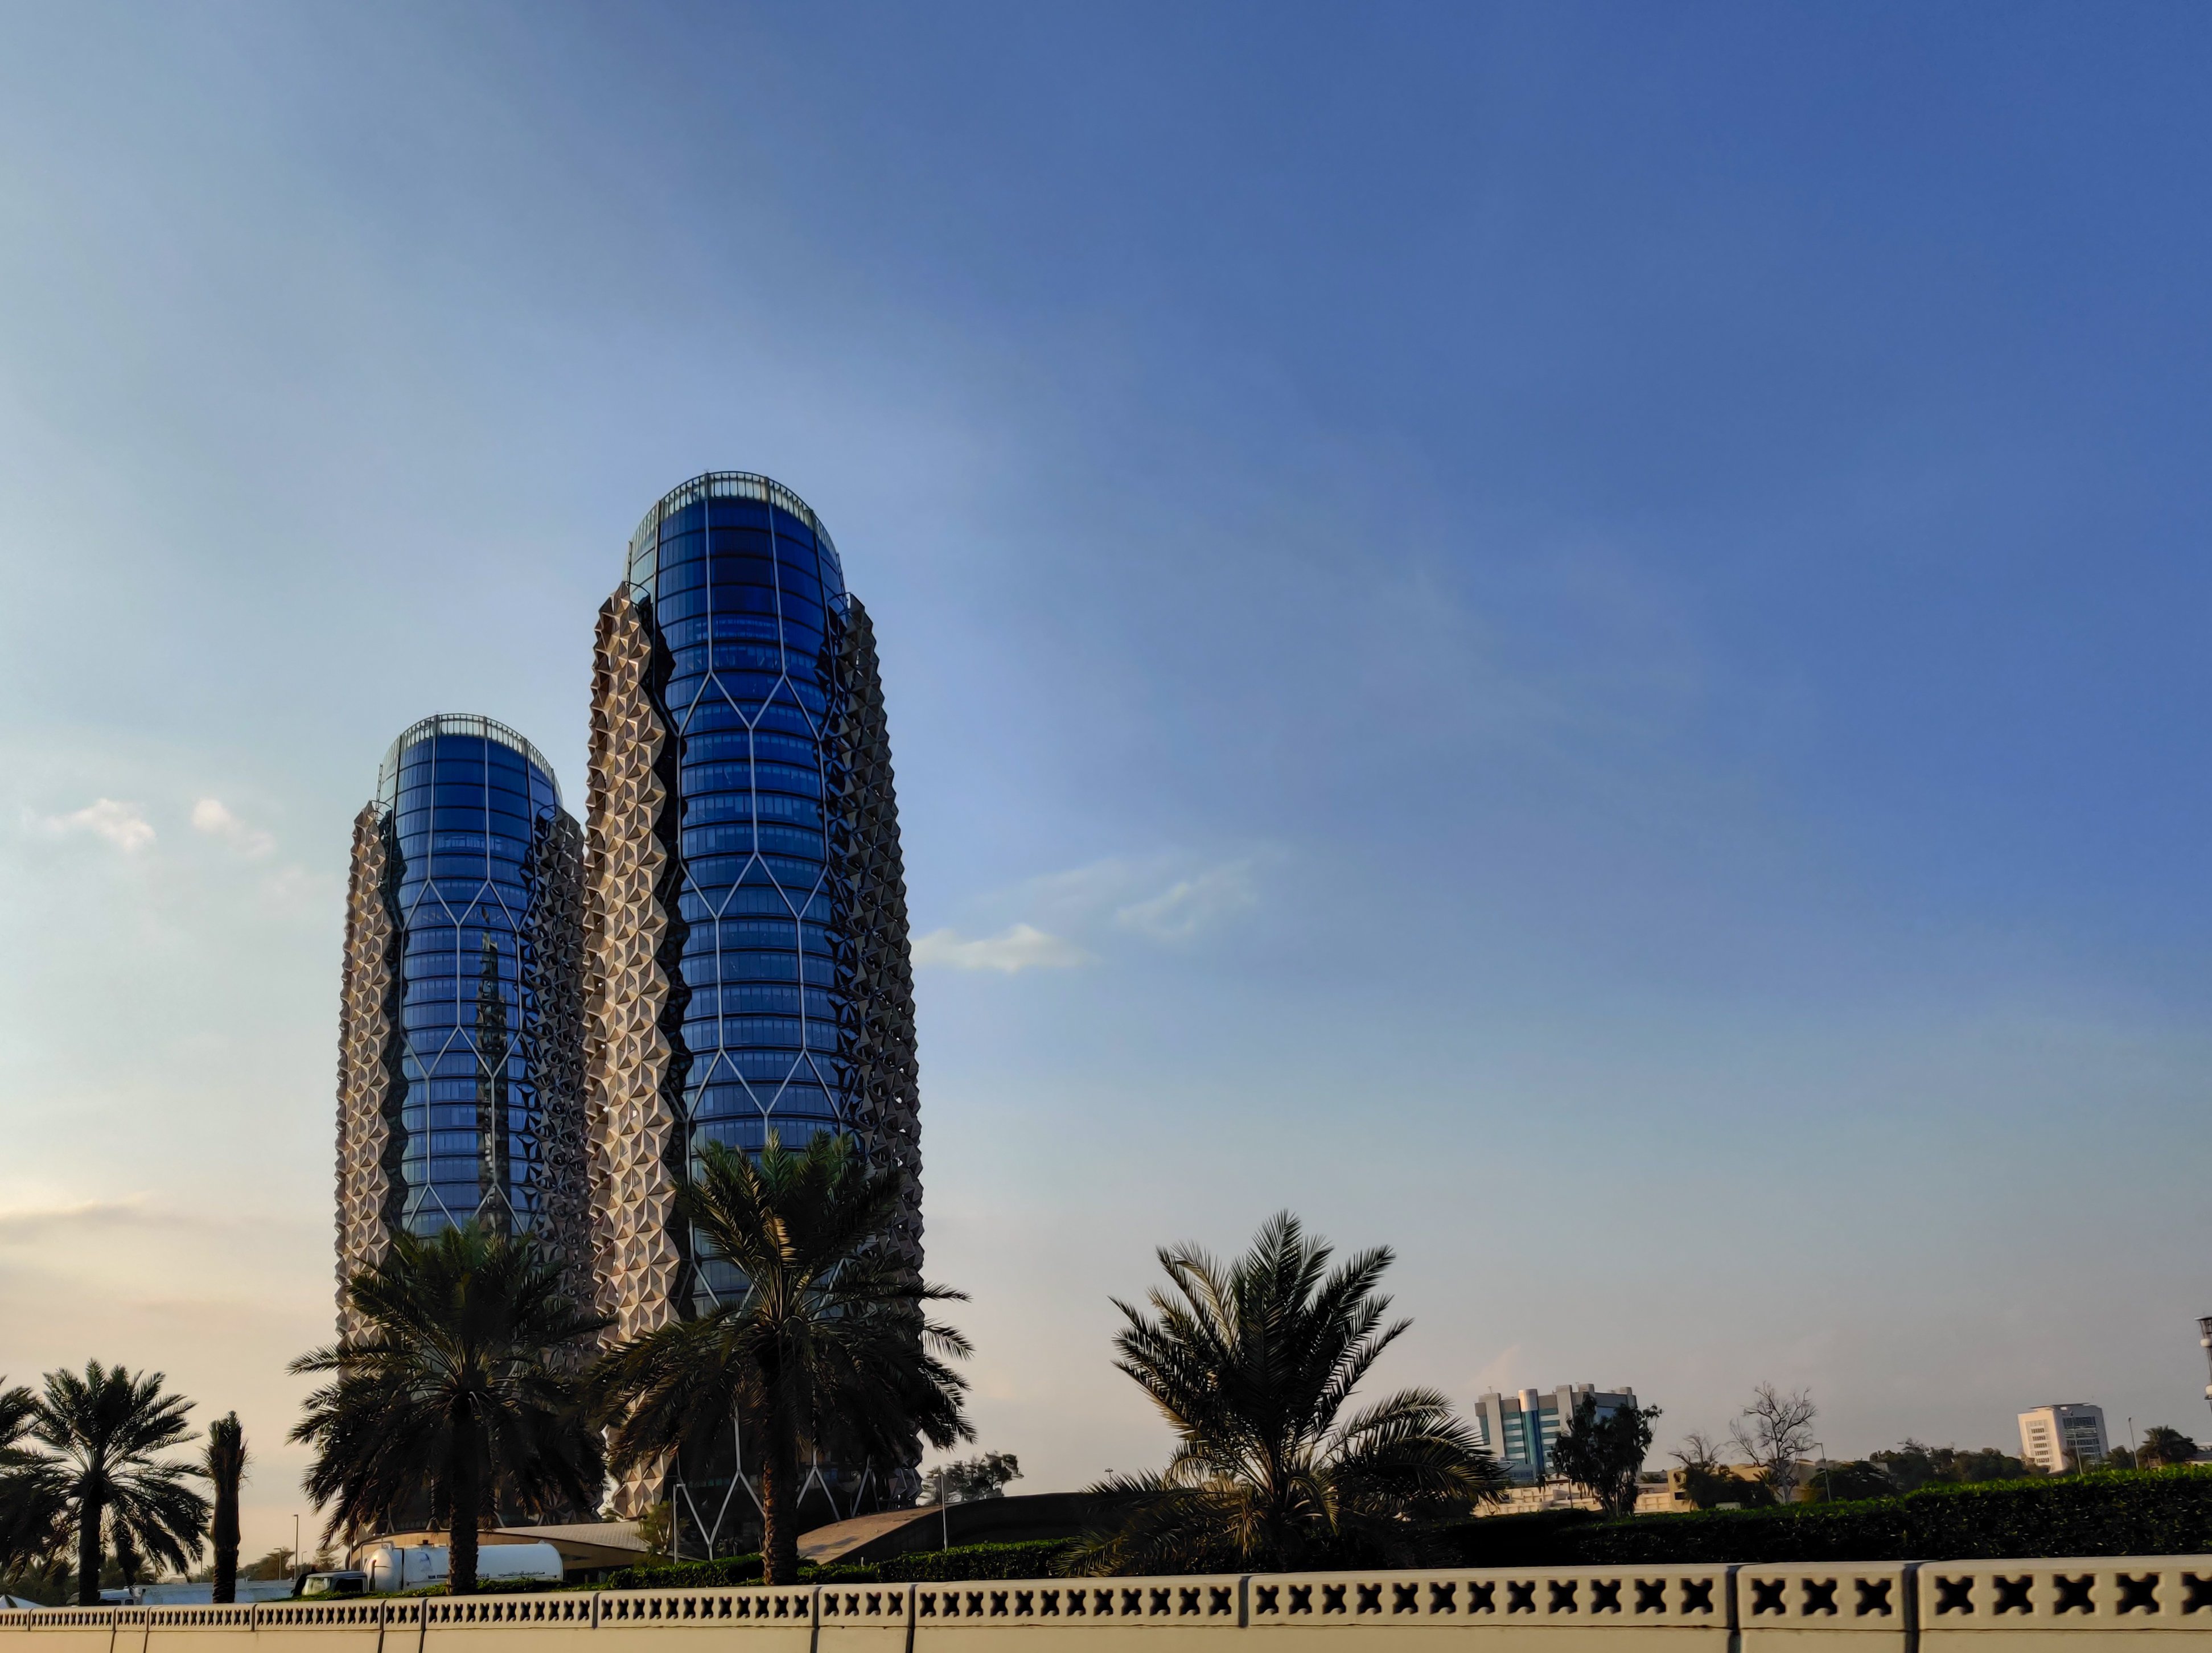 Beautiful high rise Al Bahar Towers towering over the Abu Dhabi skyline